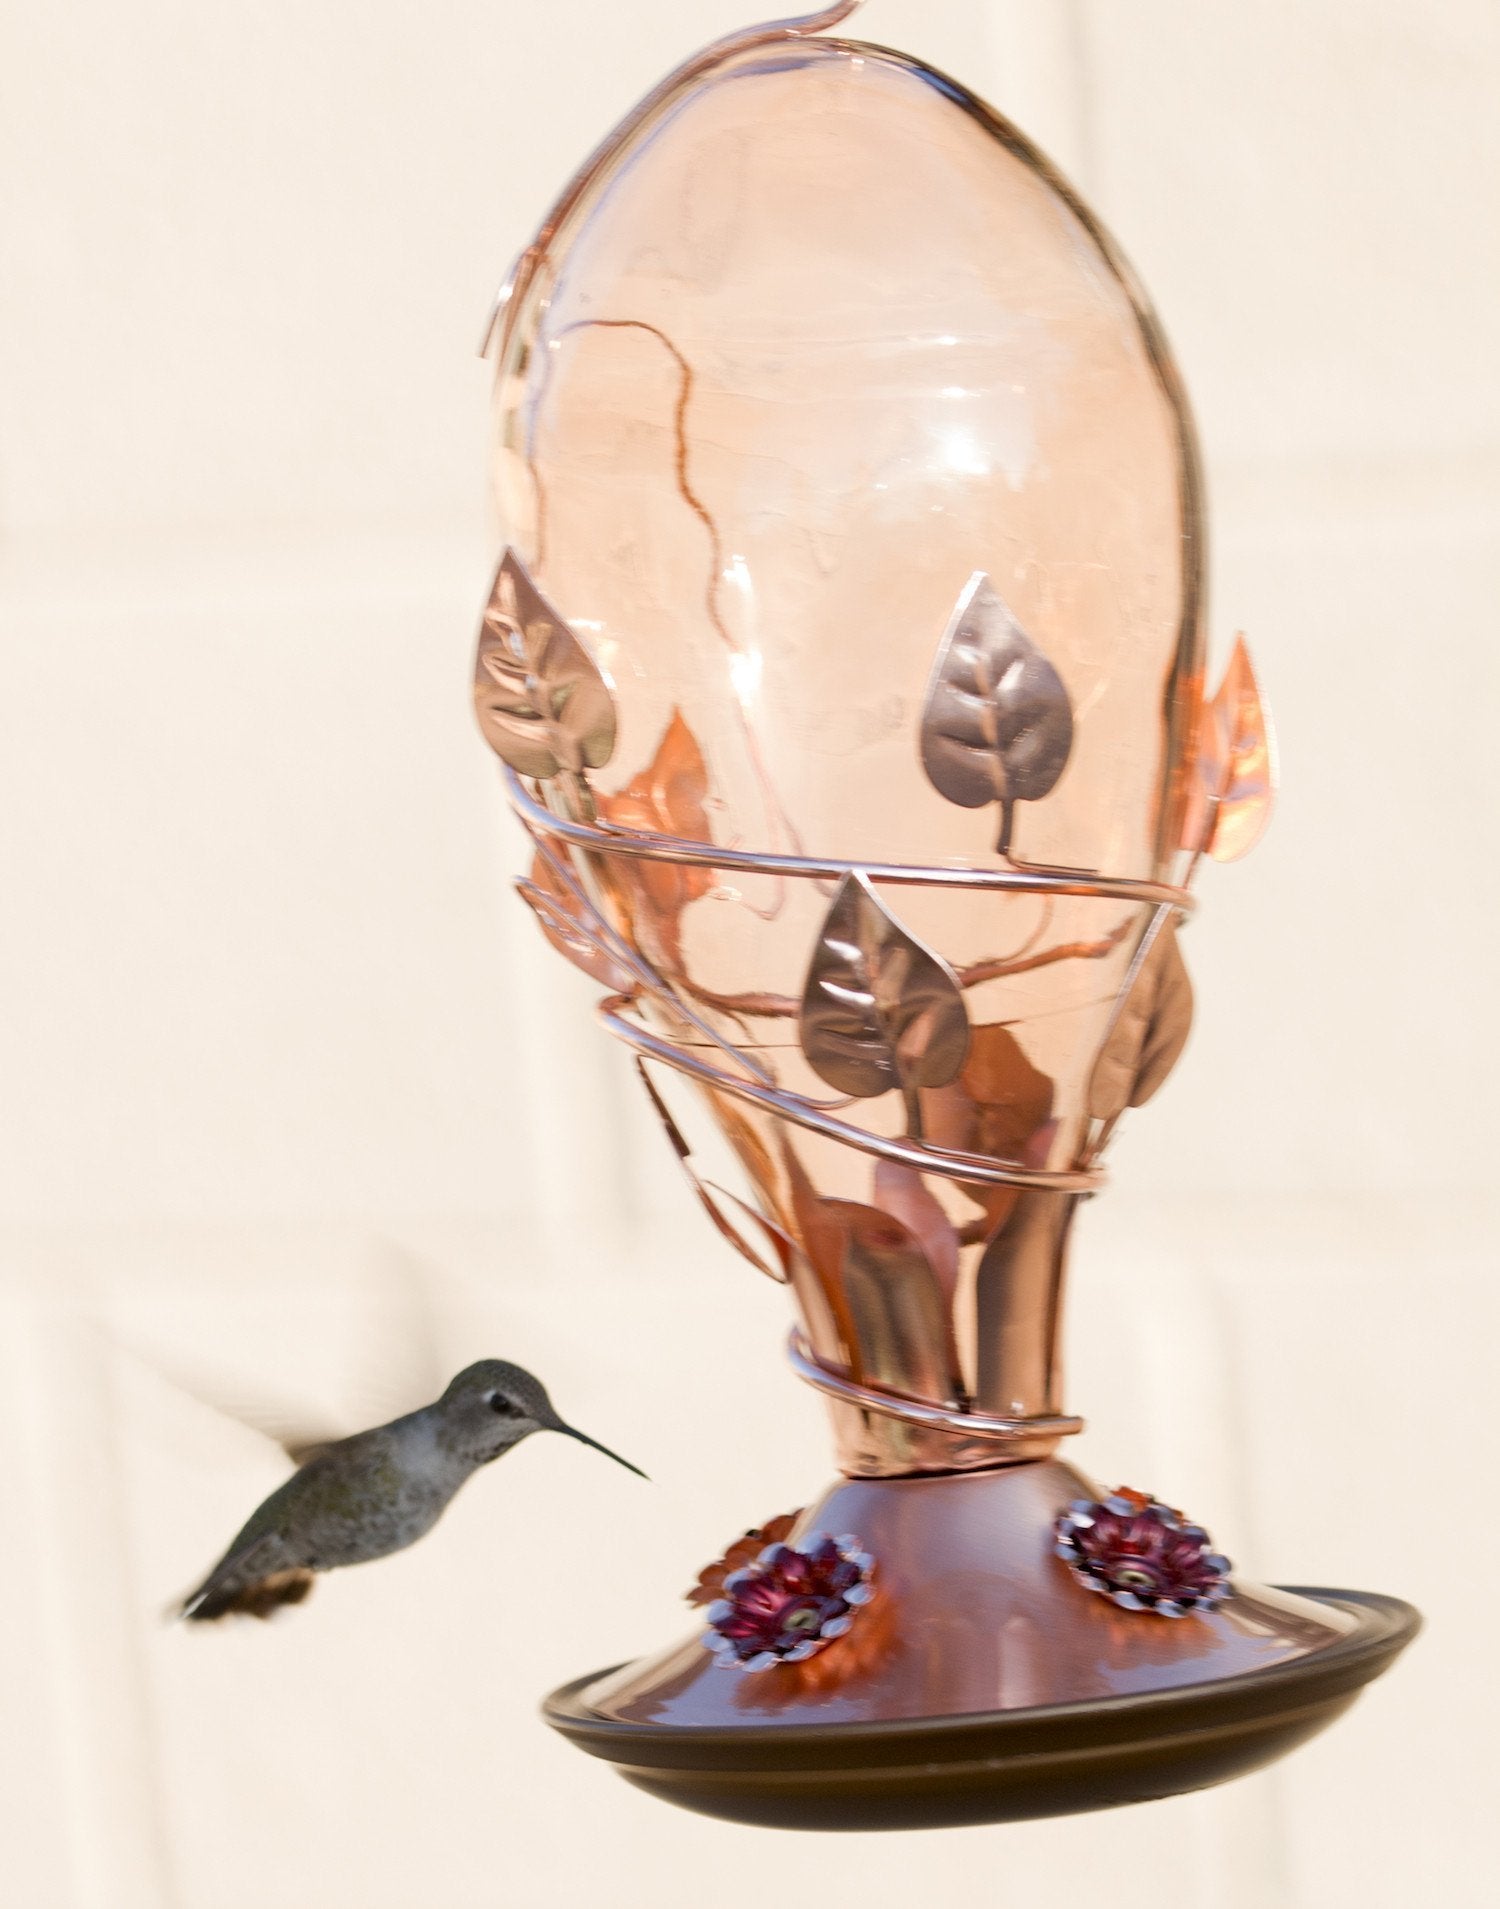 Plow & Hearth Glass Window Hummingbird Feeder & Reviews - Wayfair